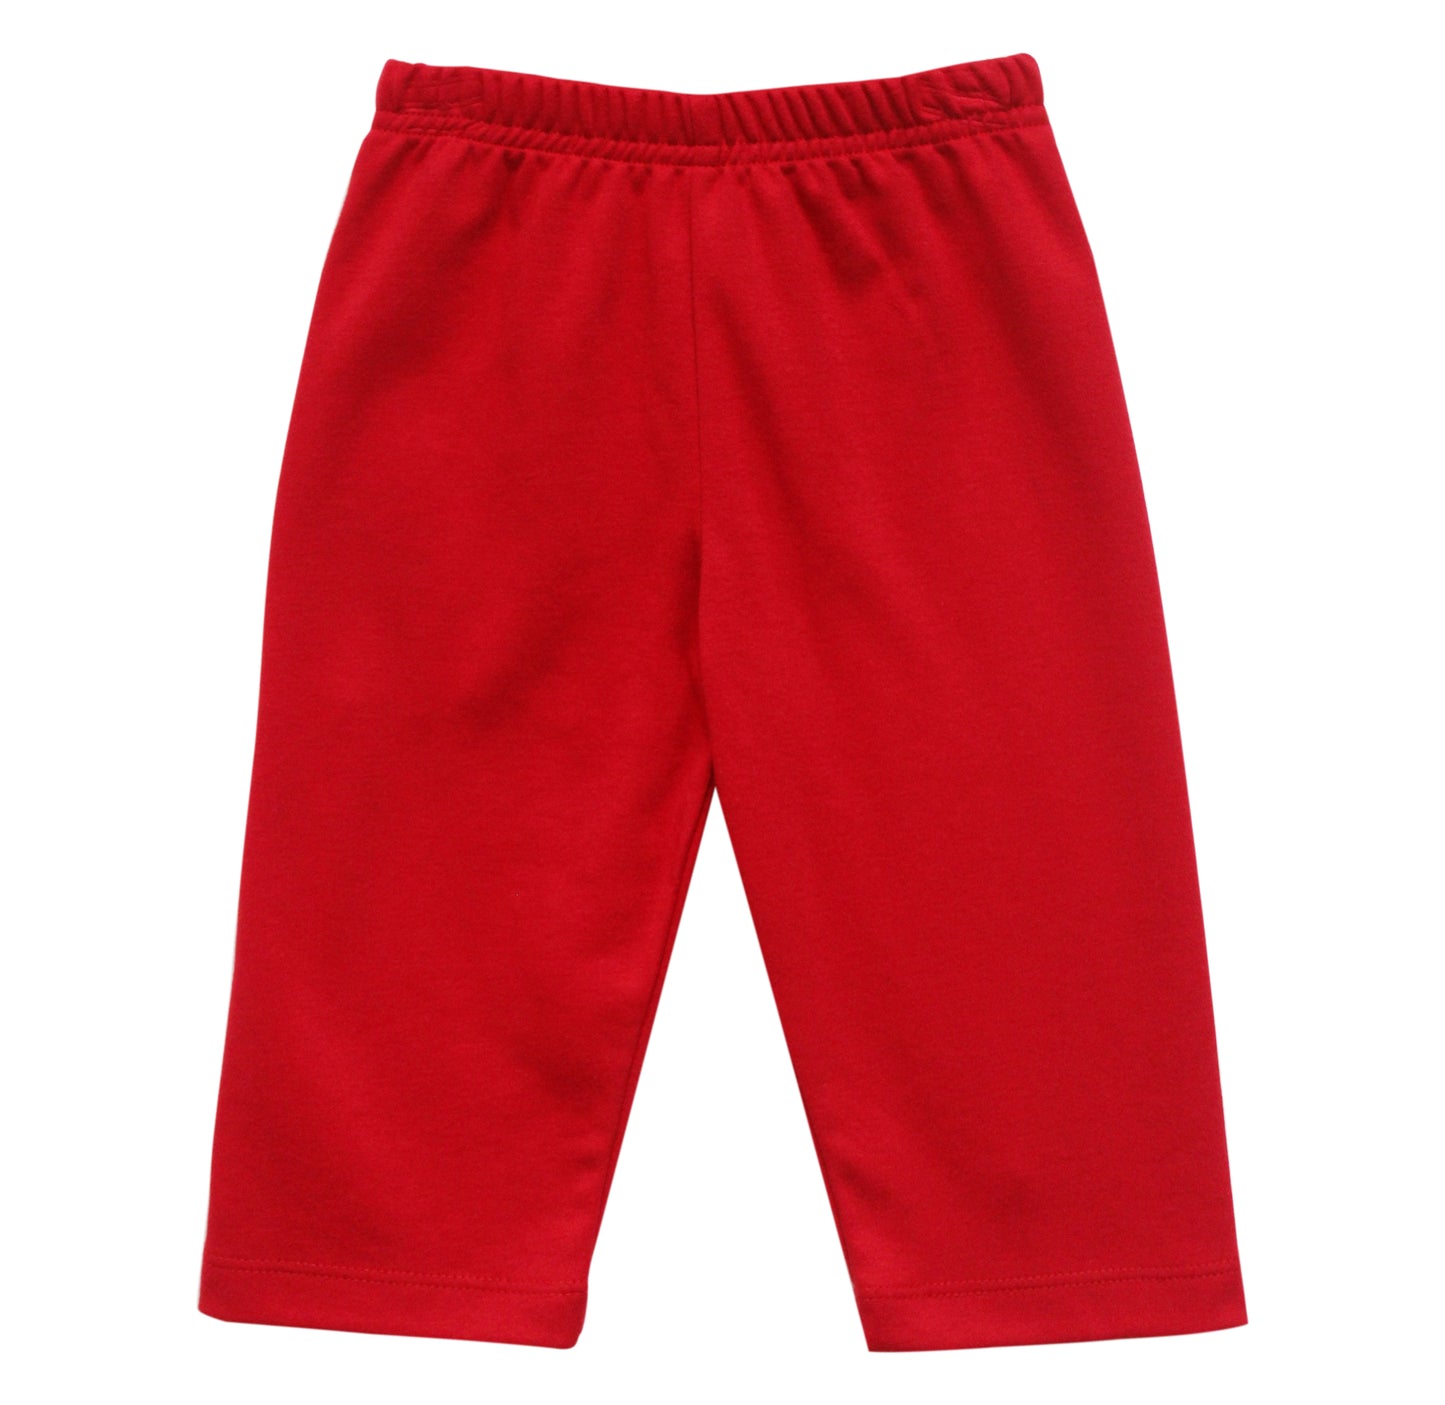 Red Knit Pants - FINAL SALE